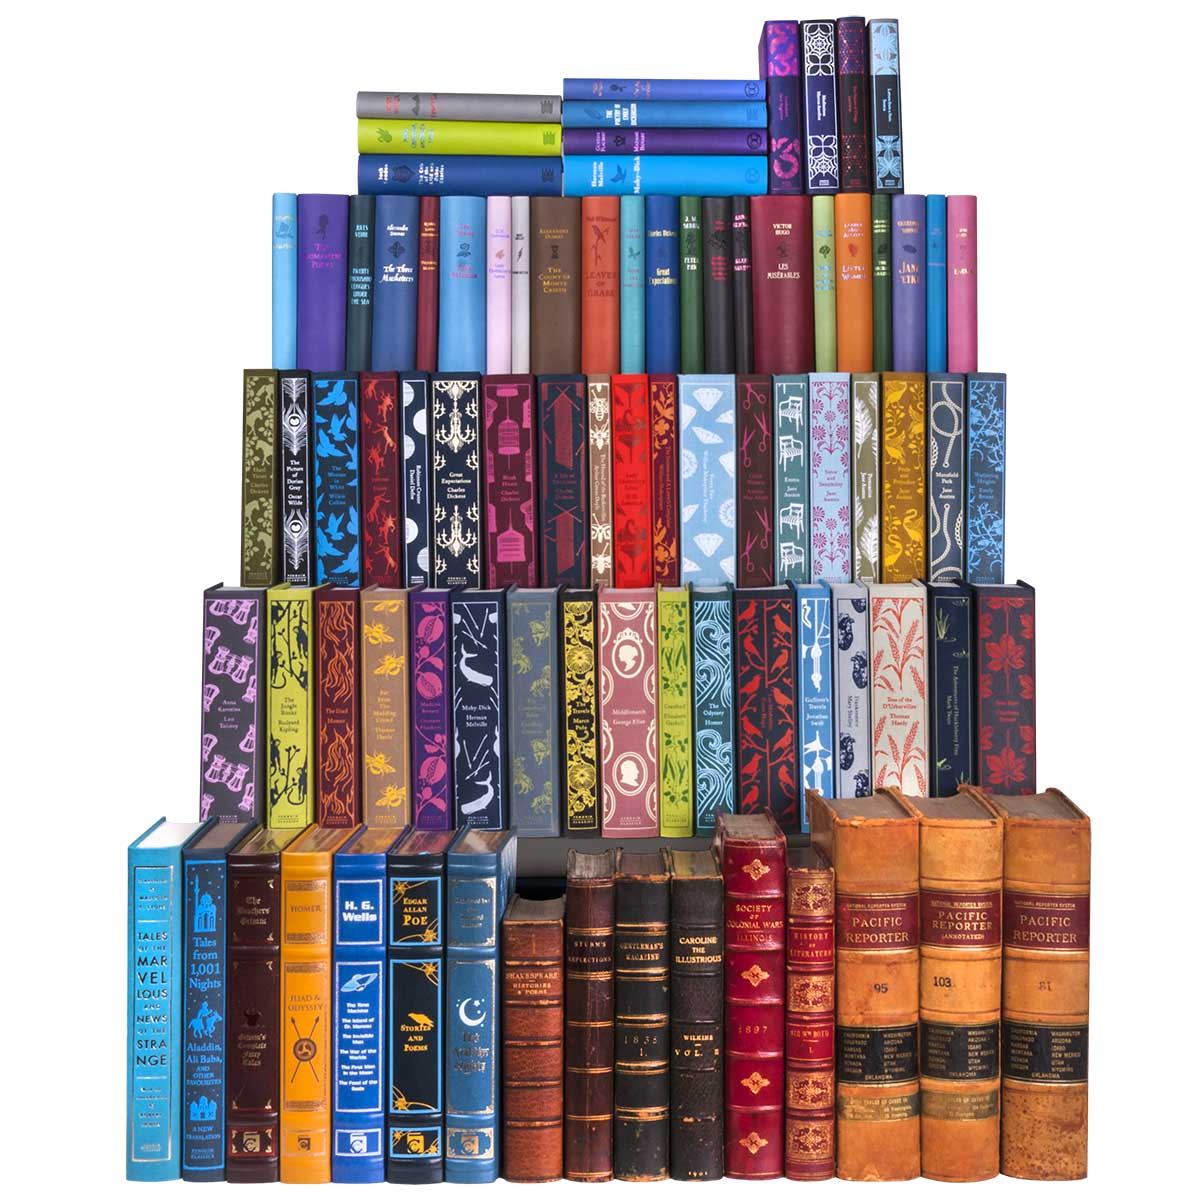 Designer bundles of books - used by Kiehls globally